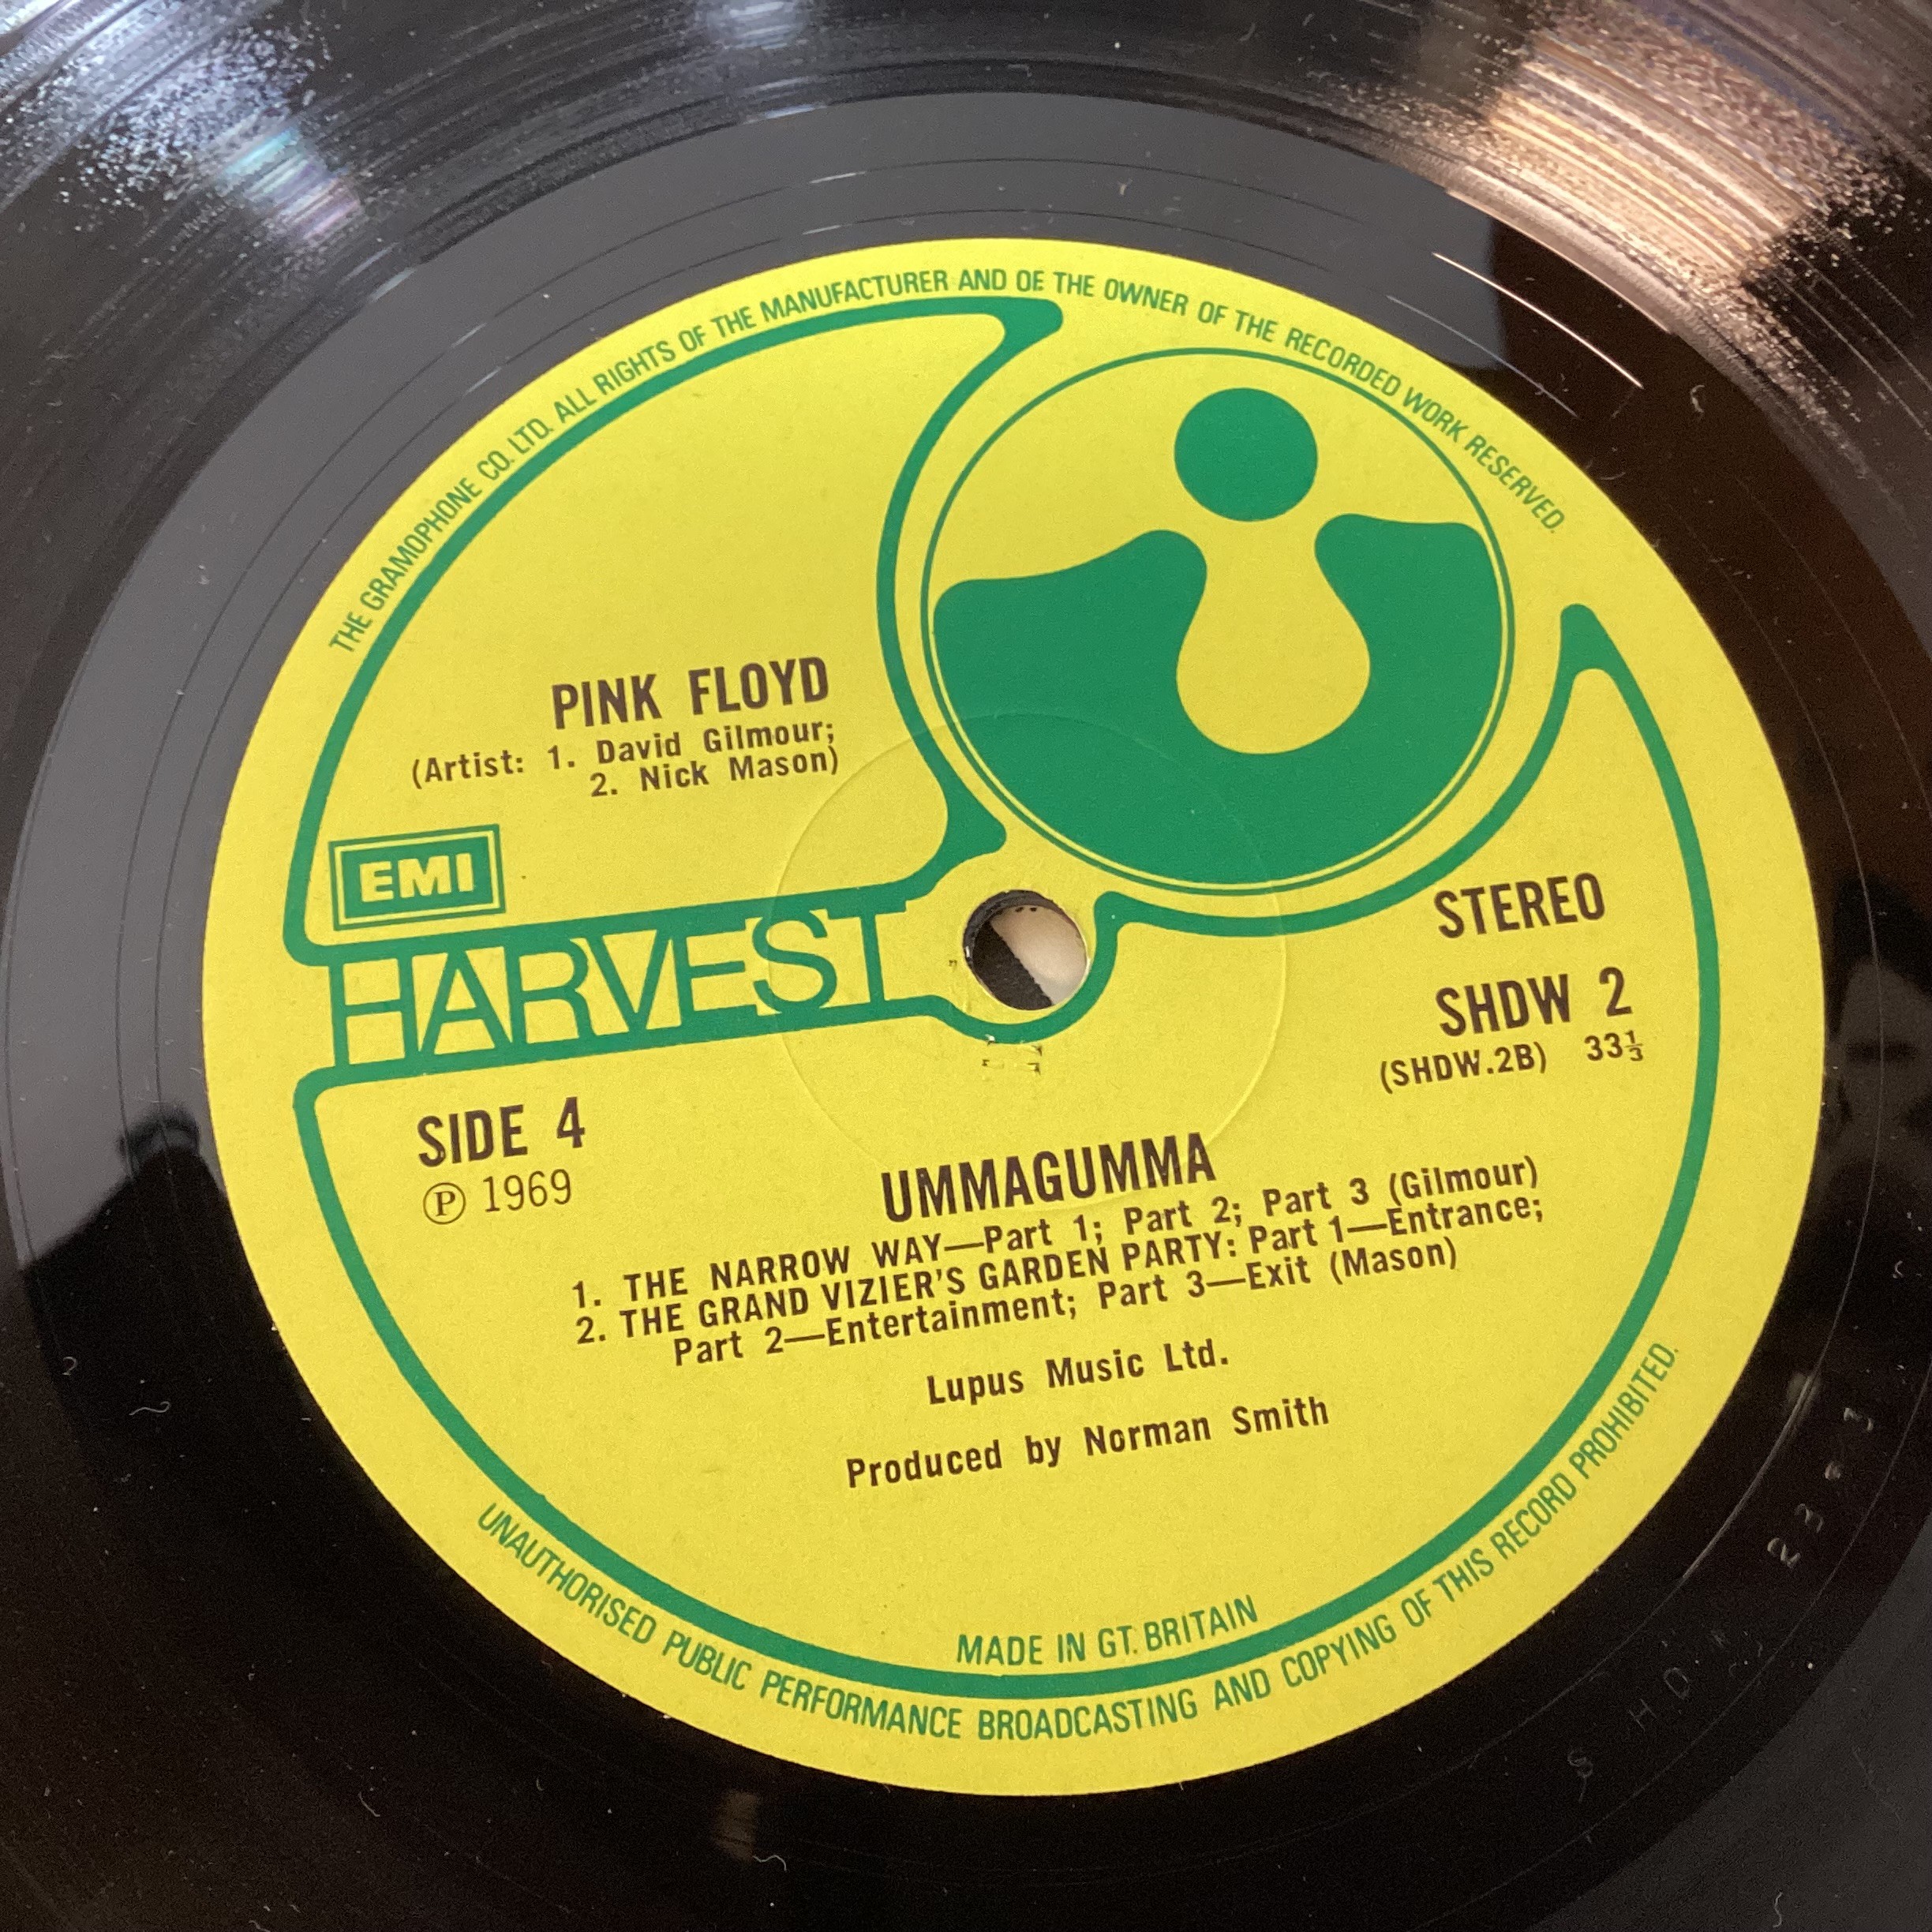 PINK FLOYD ‘UMMAGUMMA’ DOUBLE VINYL ALBUM. 1969 UK double vinyl LP with EMI logo on the labels. In a - Image 6 of 7